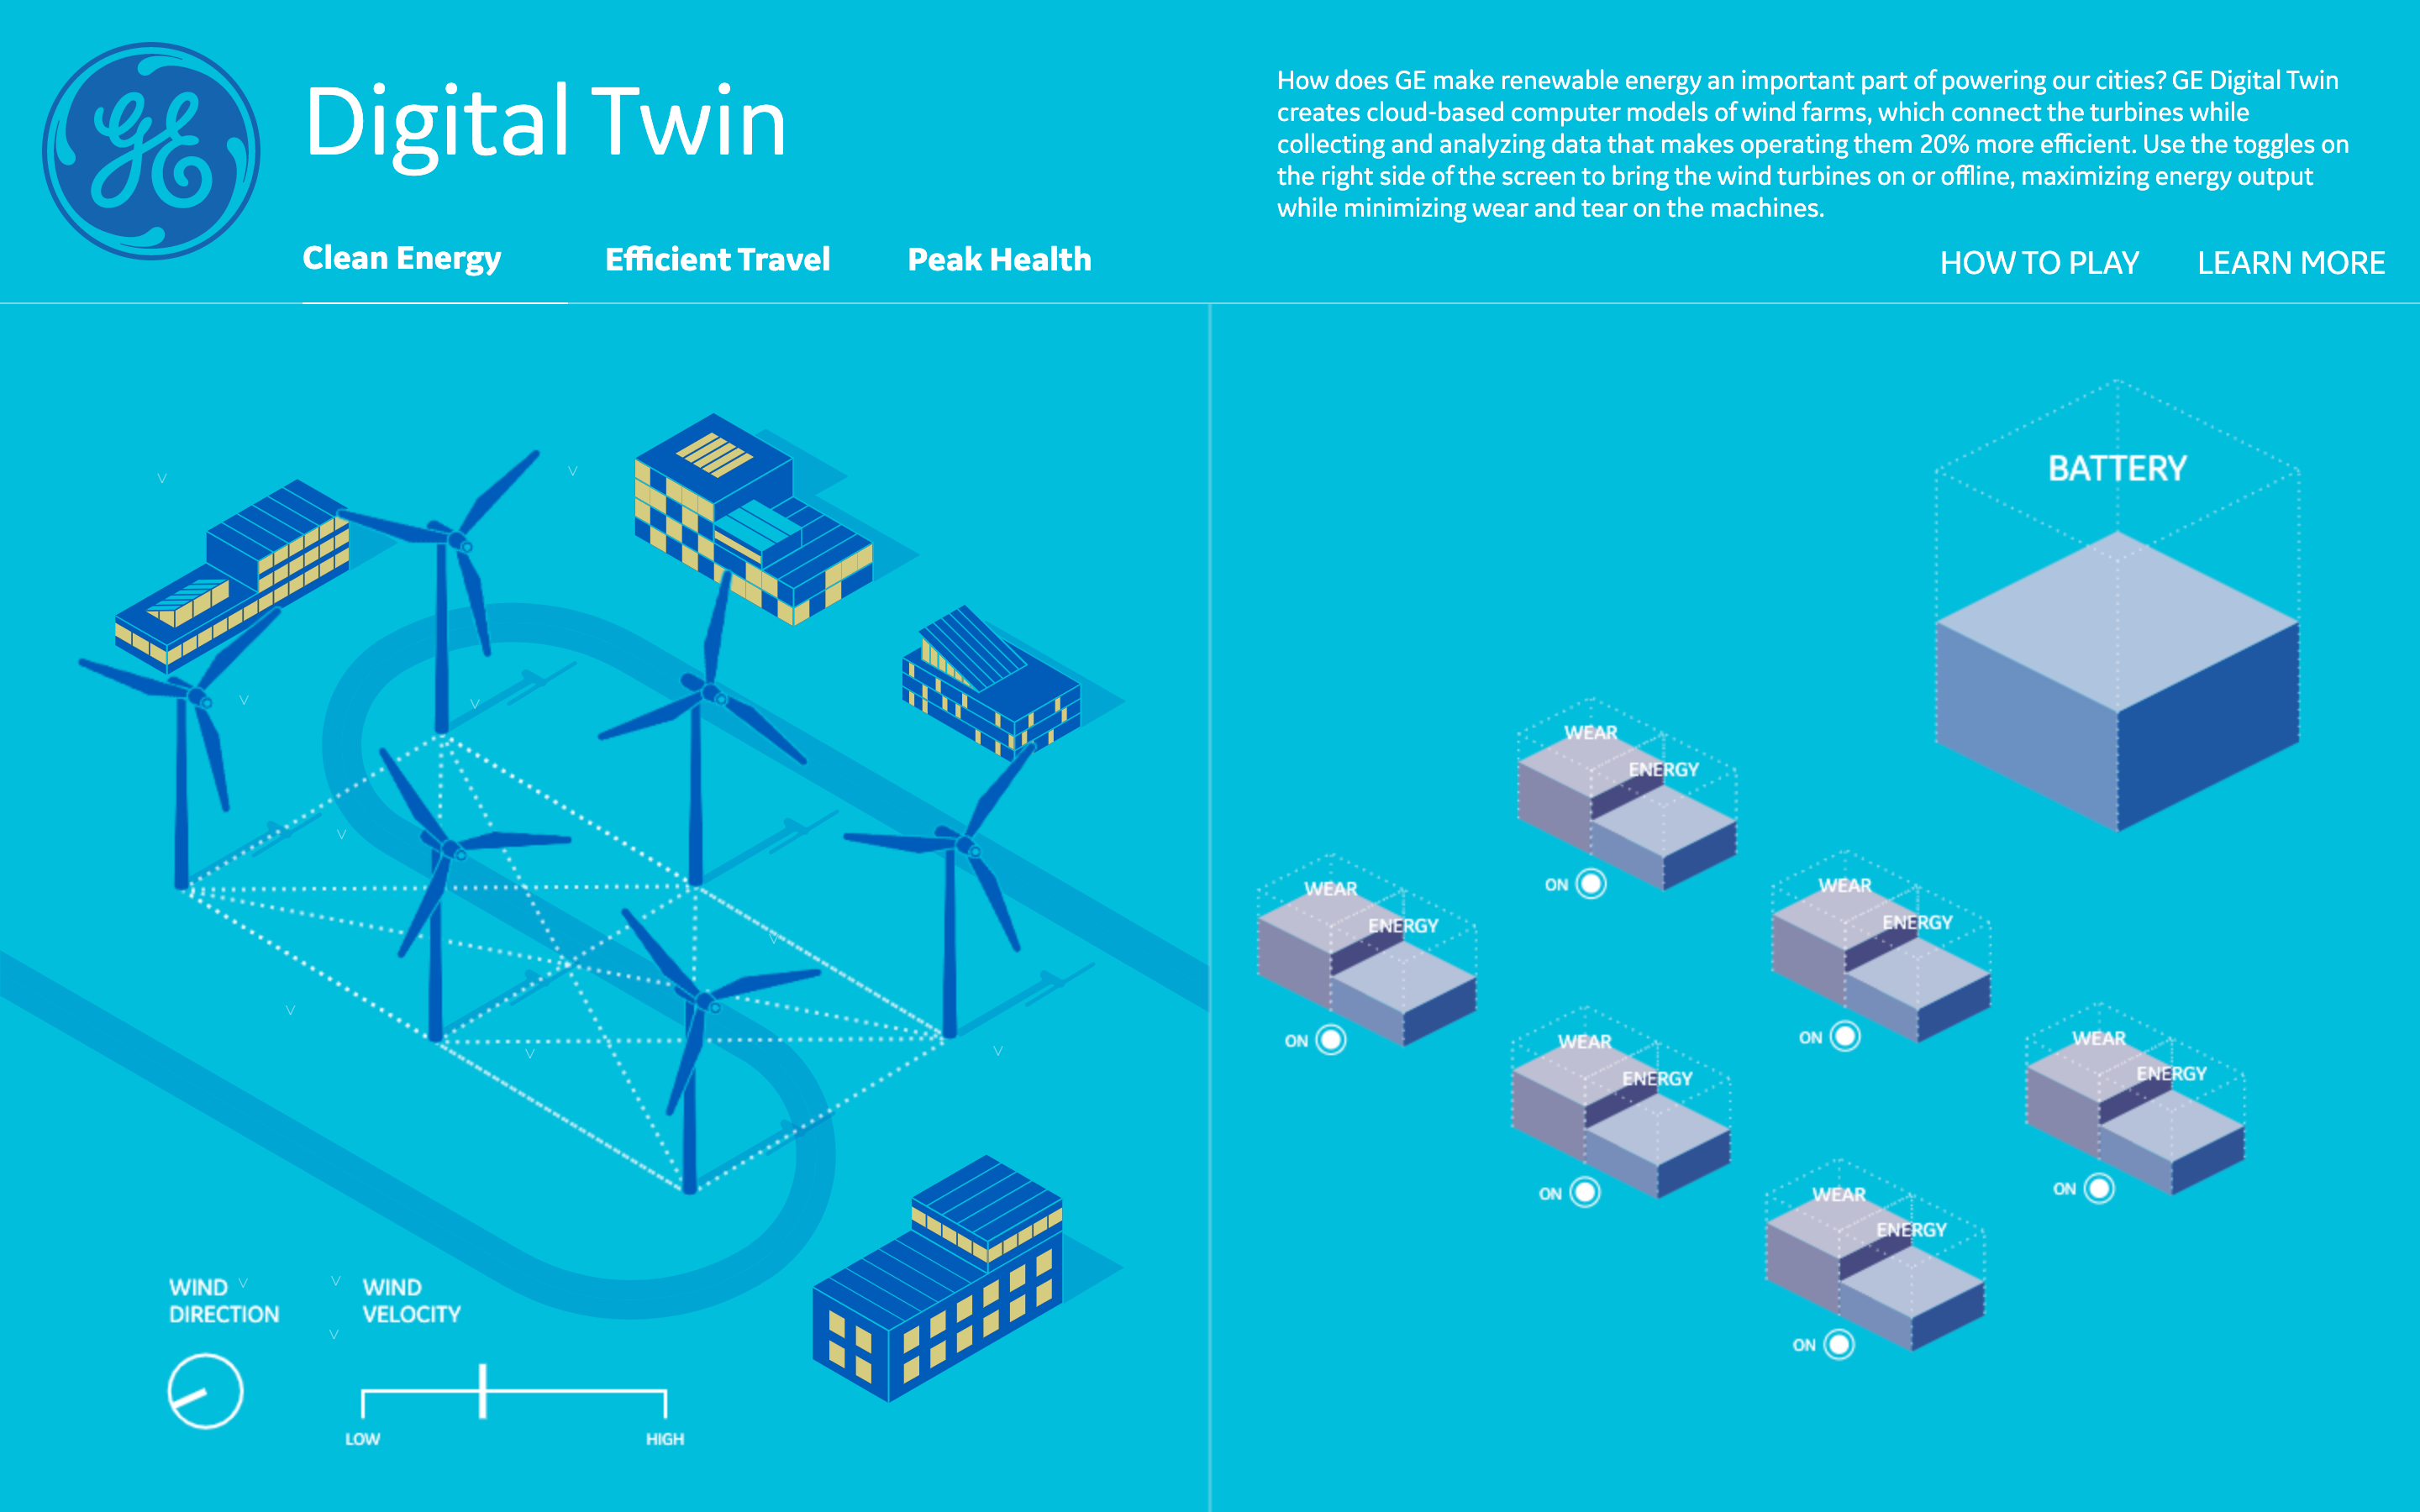 Digital Twin Simulation: Clean Energy